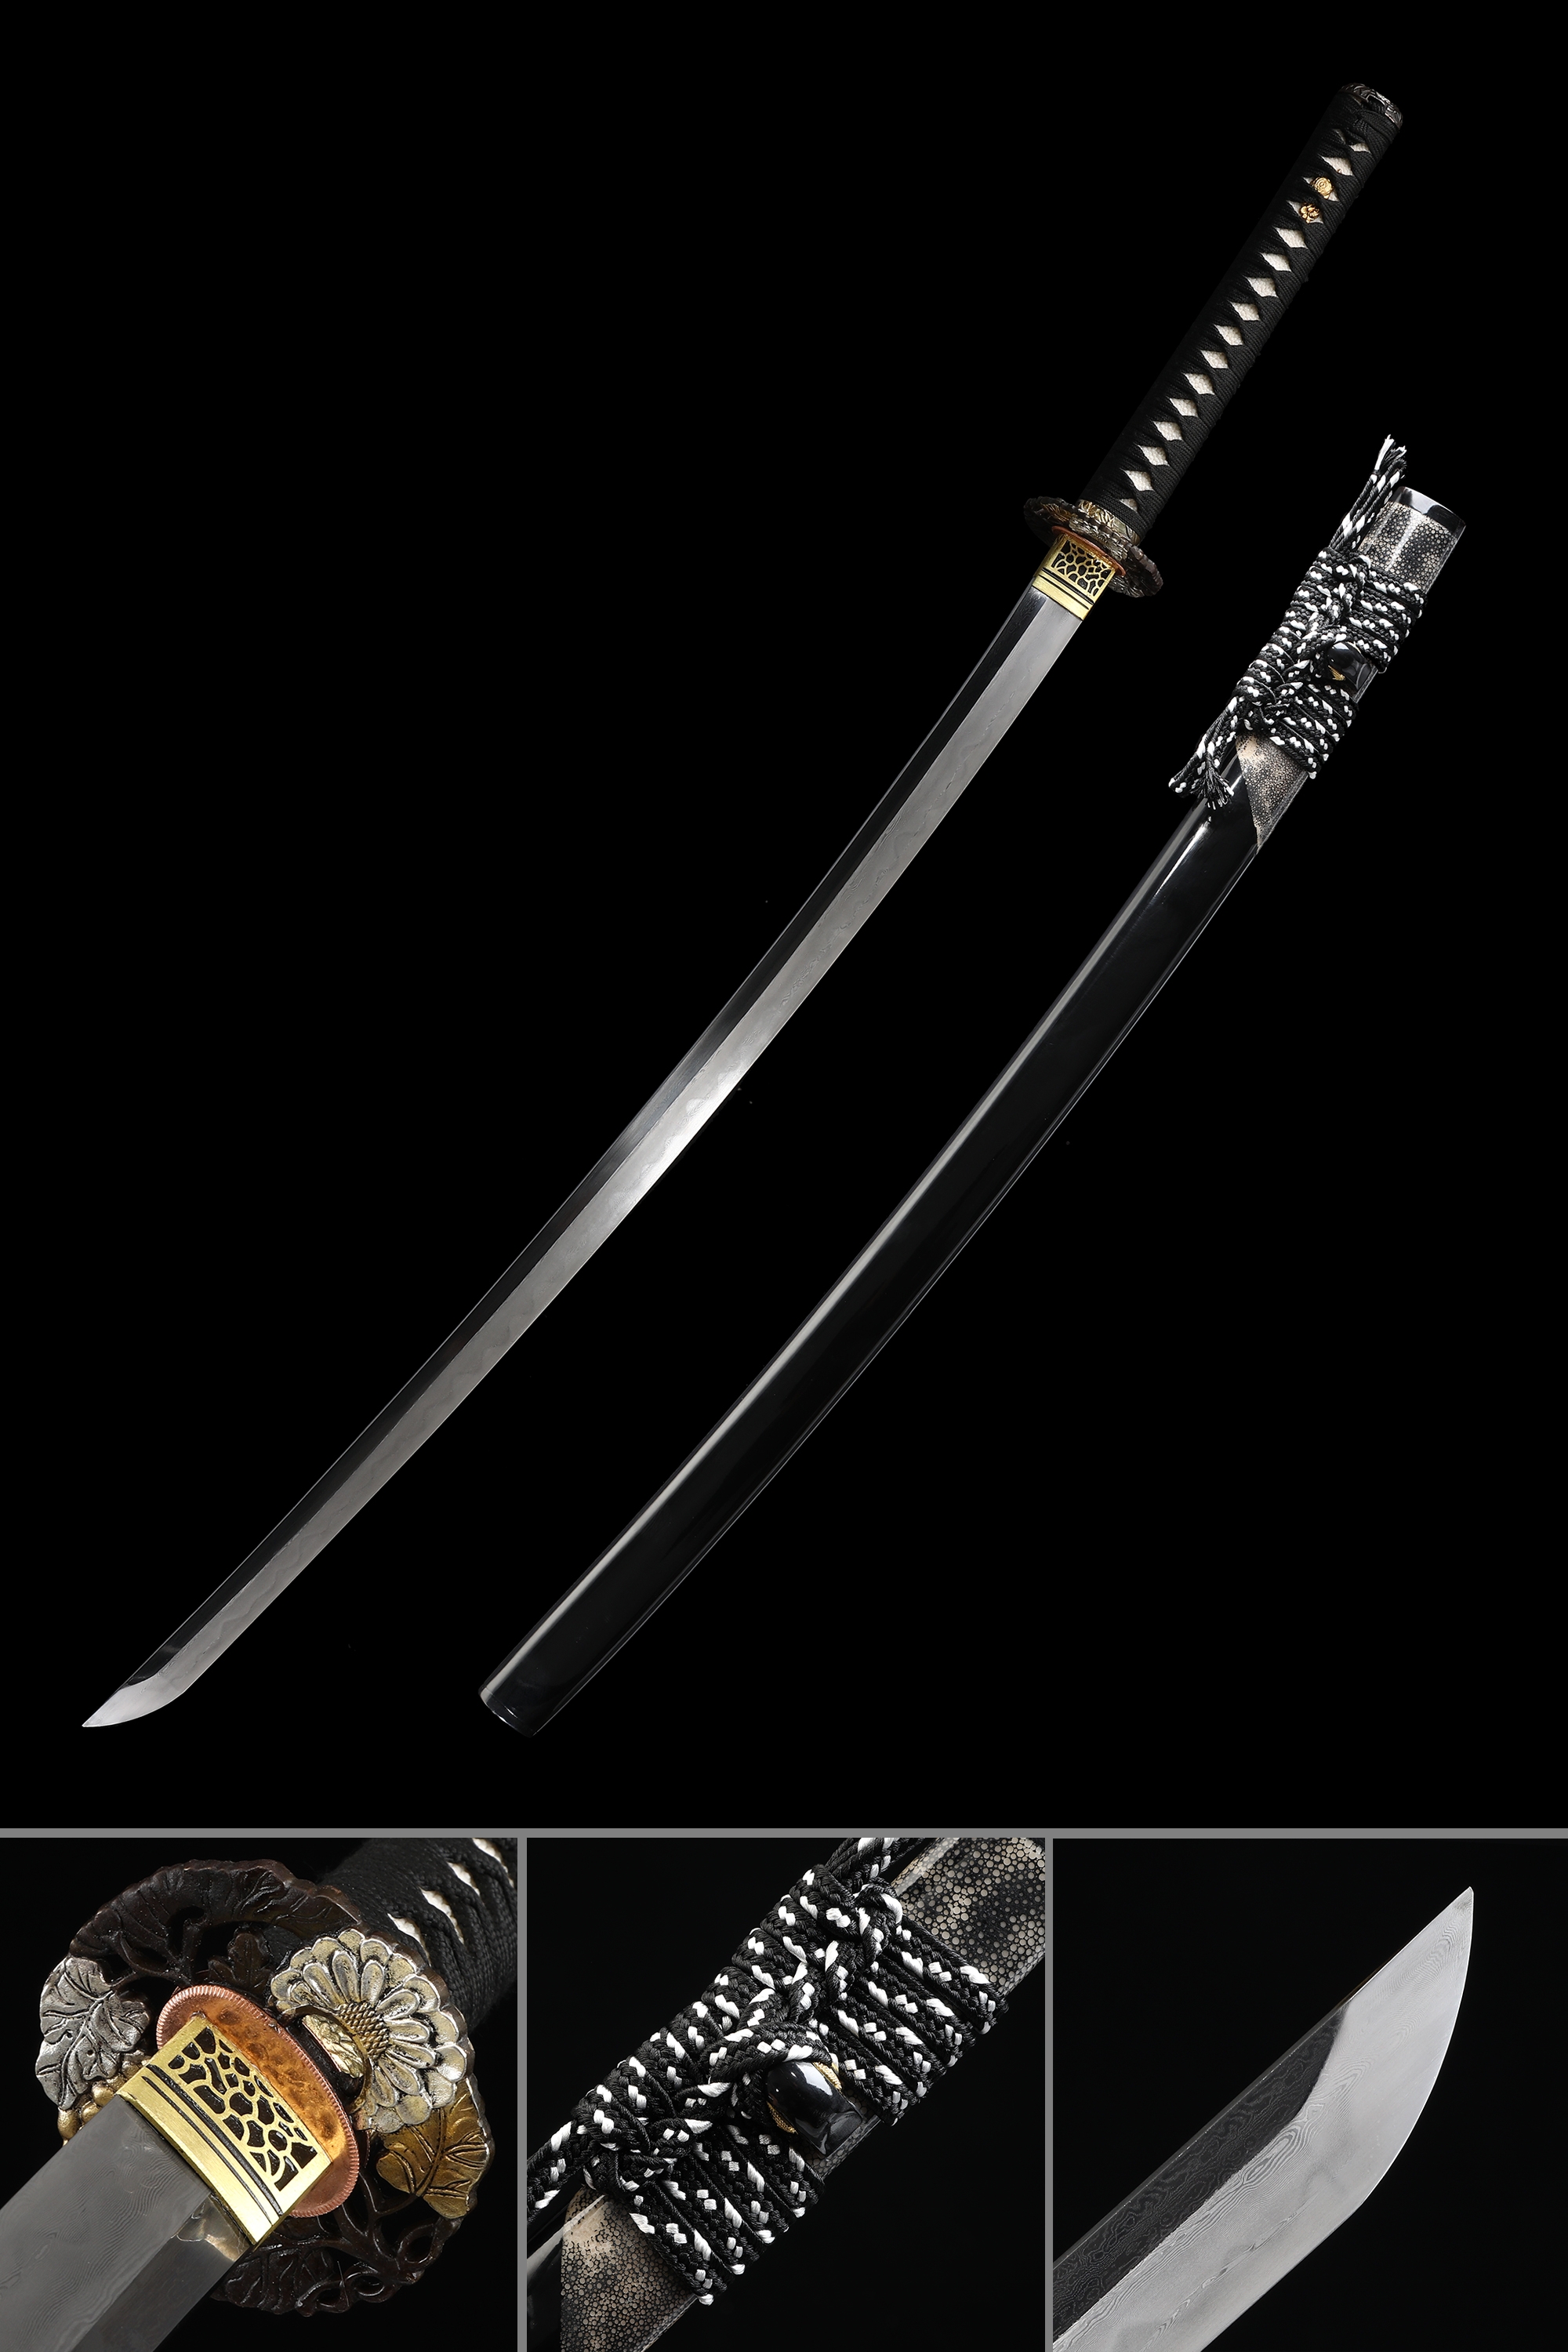 Details about   Hand Forged High Quality Japan Katana Ninj Sect Samurai Sword Sharp Battle Ready 